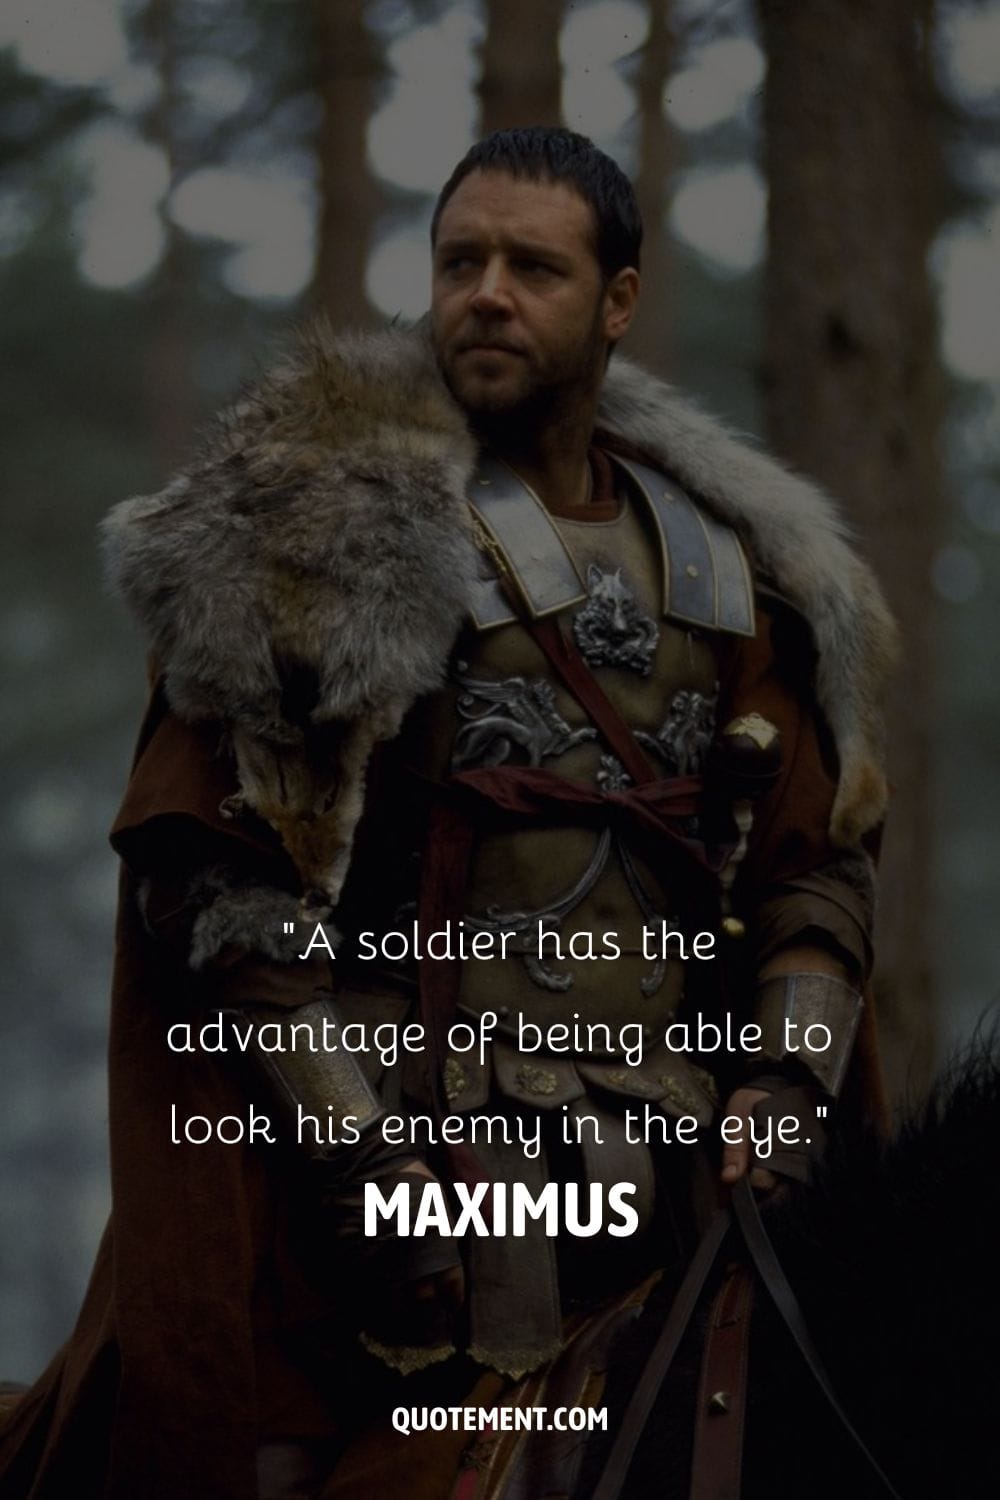 Maximus, the hero of the Colosseum.